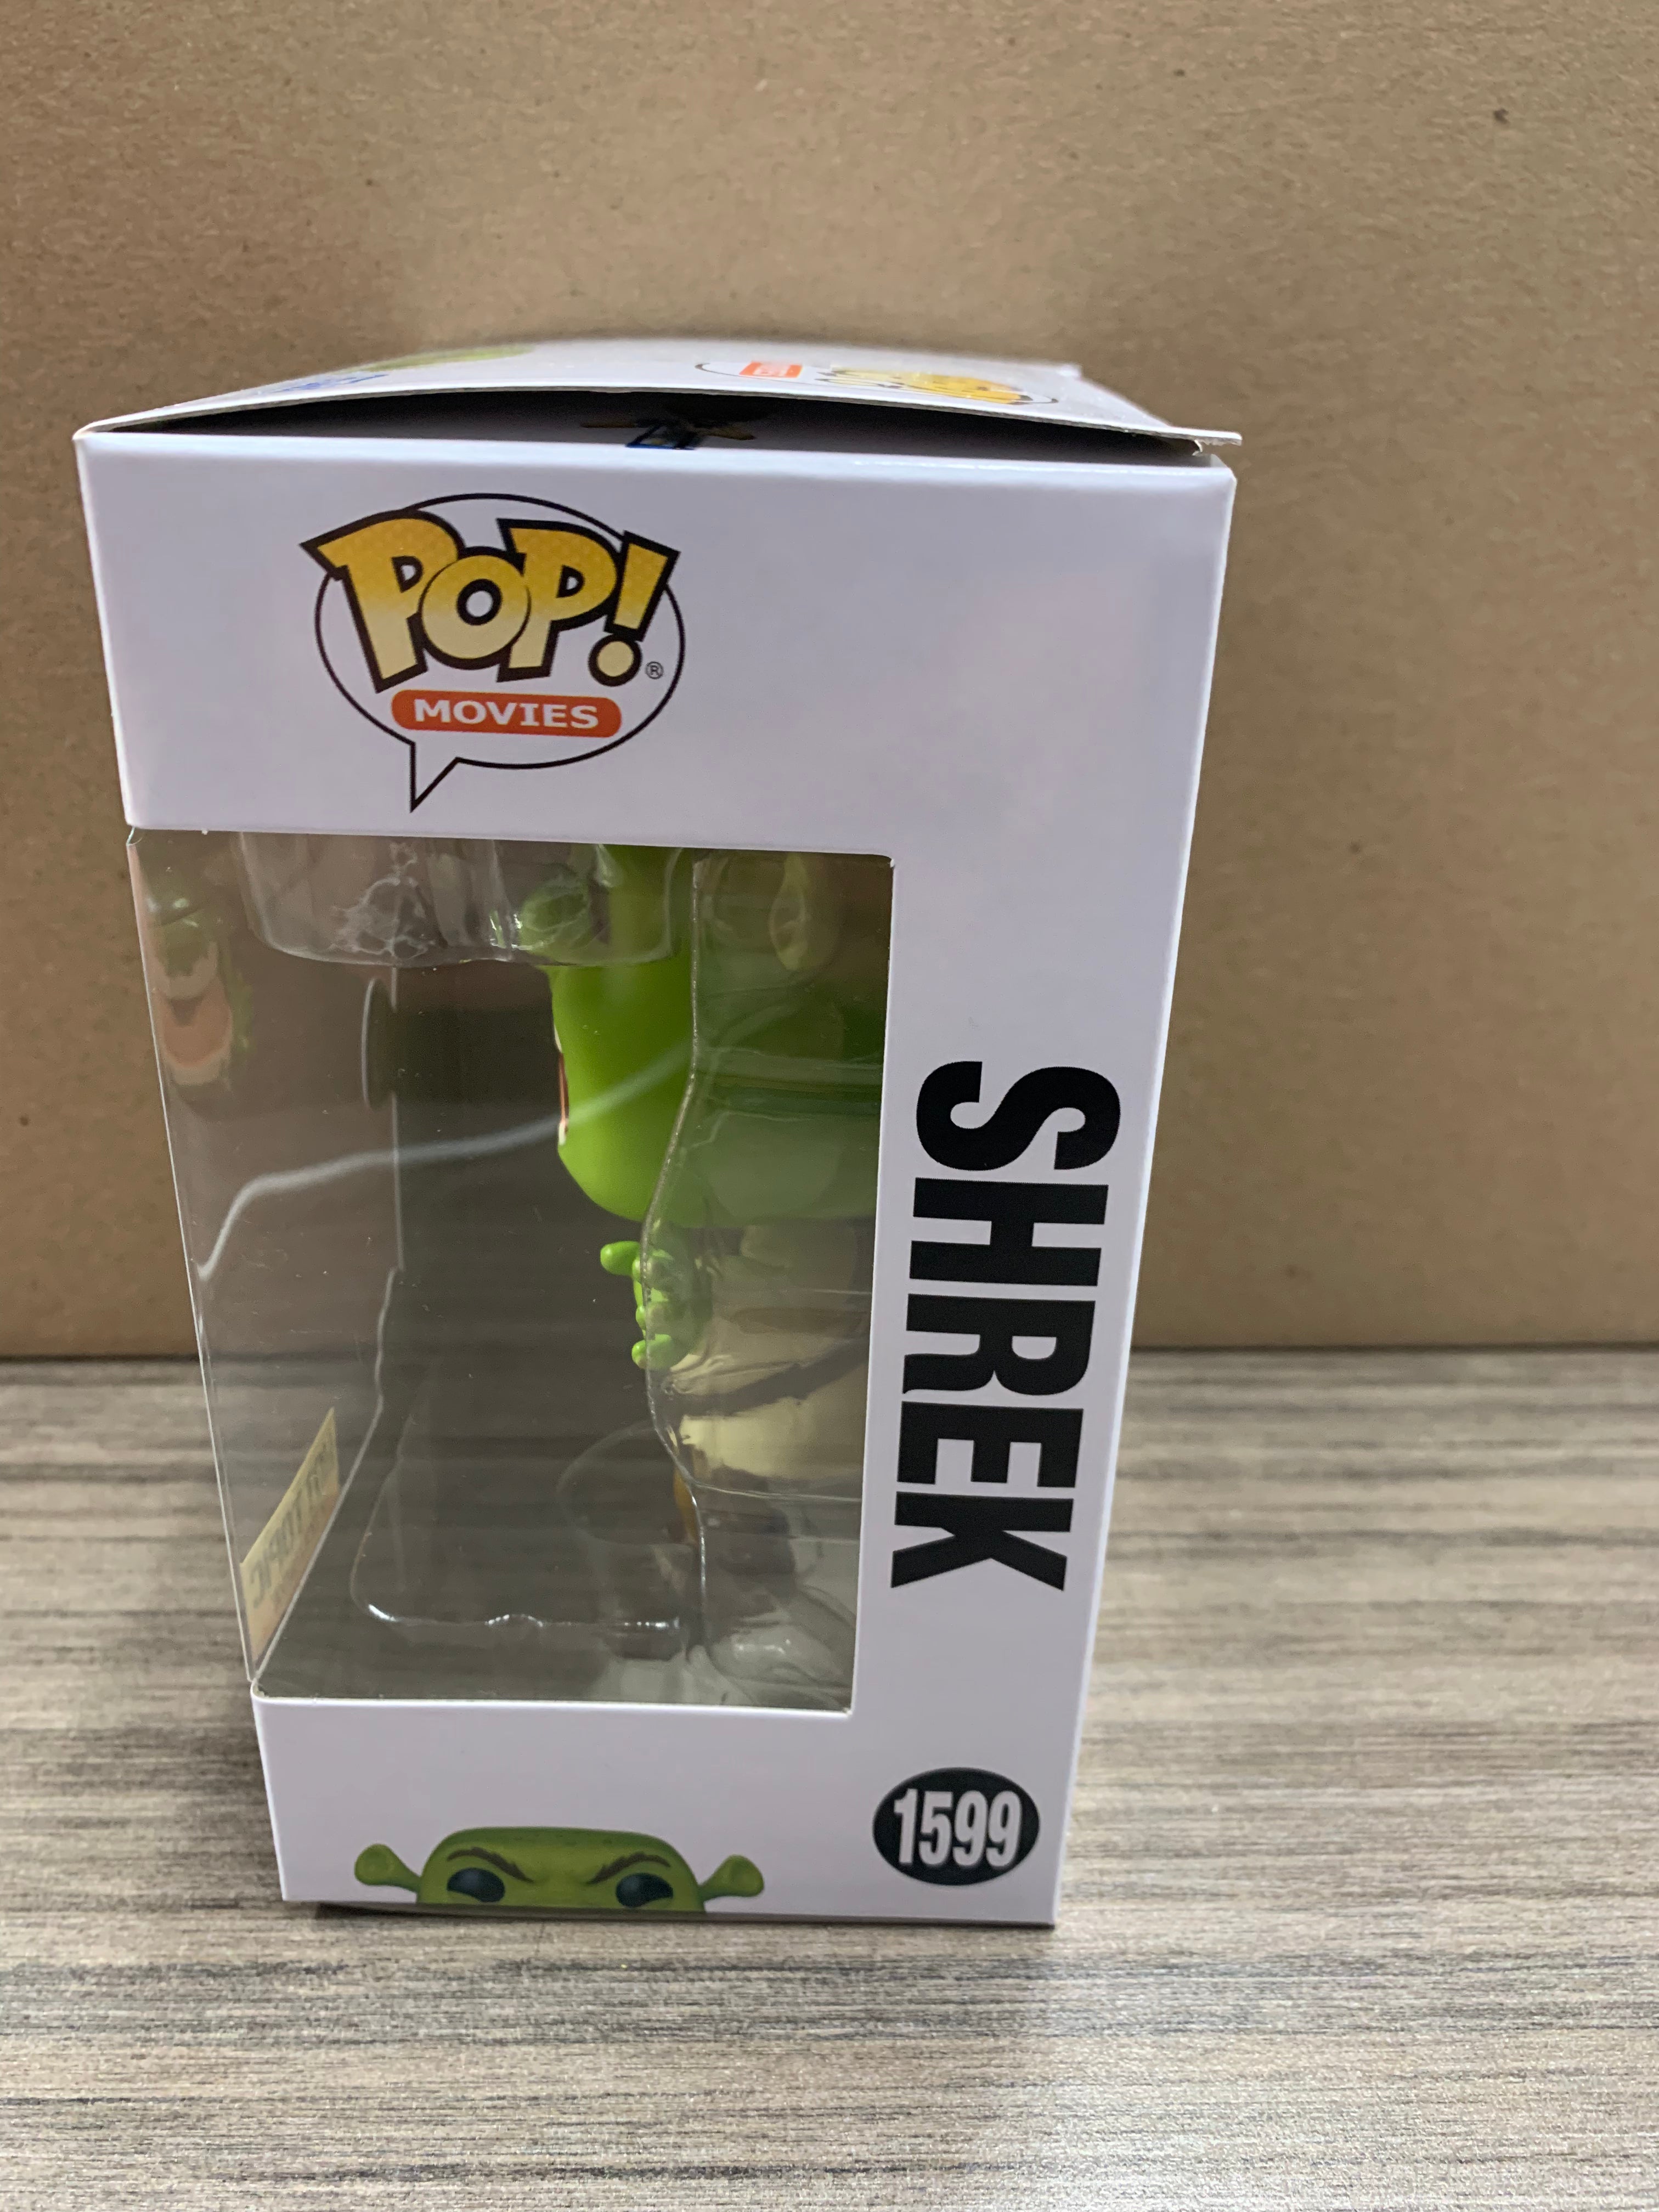 Shrek 1599 Hot Topic Exclusive Funko Pop